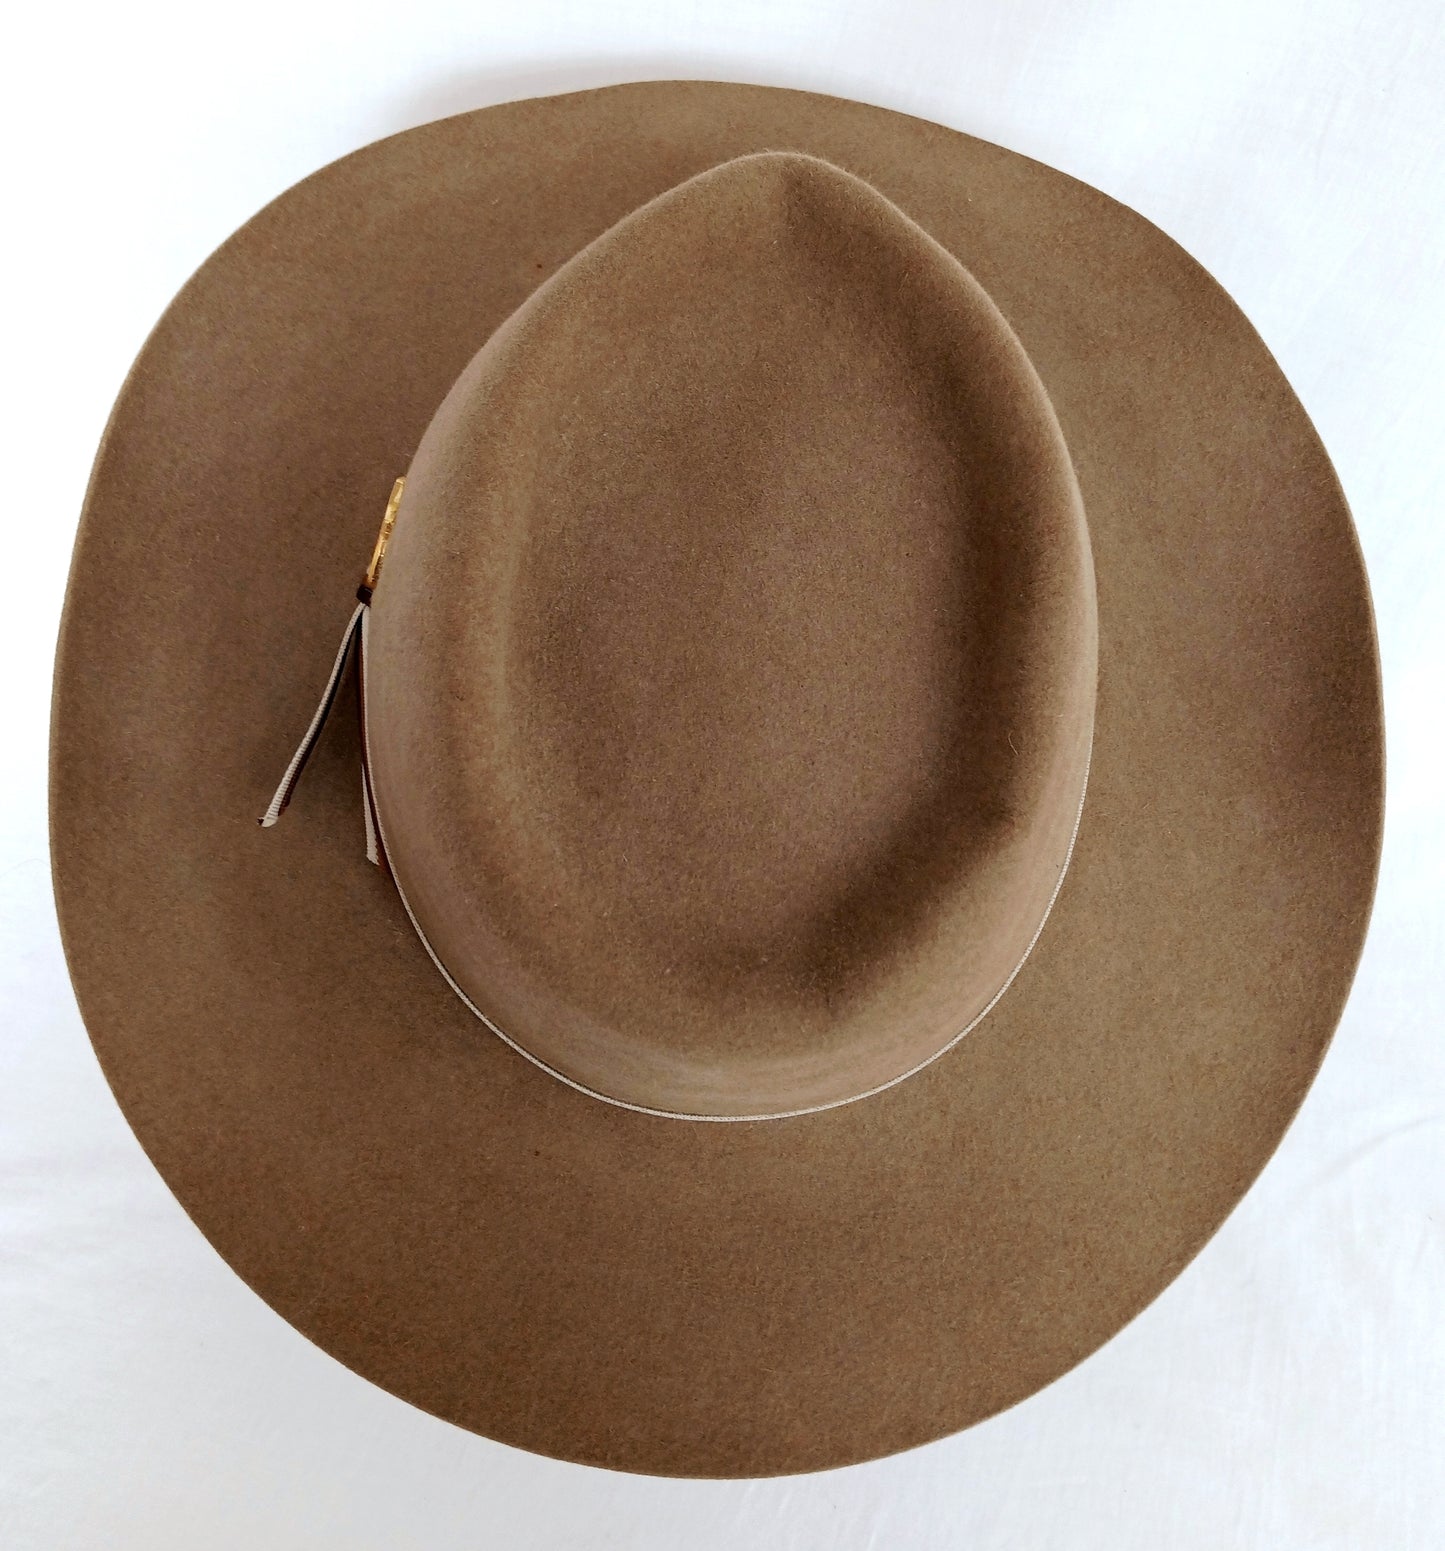 Vintage AKRUBA Greg Norman Collection Hat for Men Fur Felt The Great White Shark Beige Pre-Creased Hat Size 57 - Australia